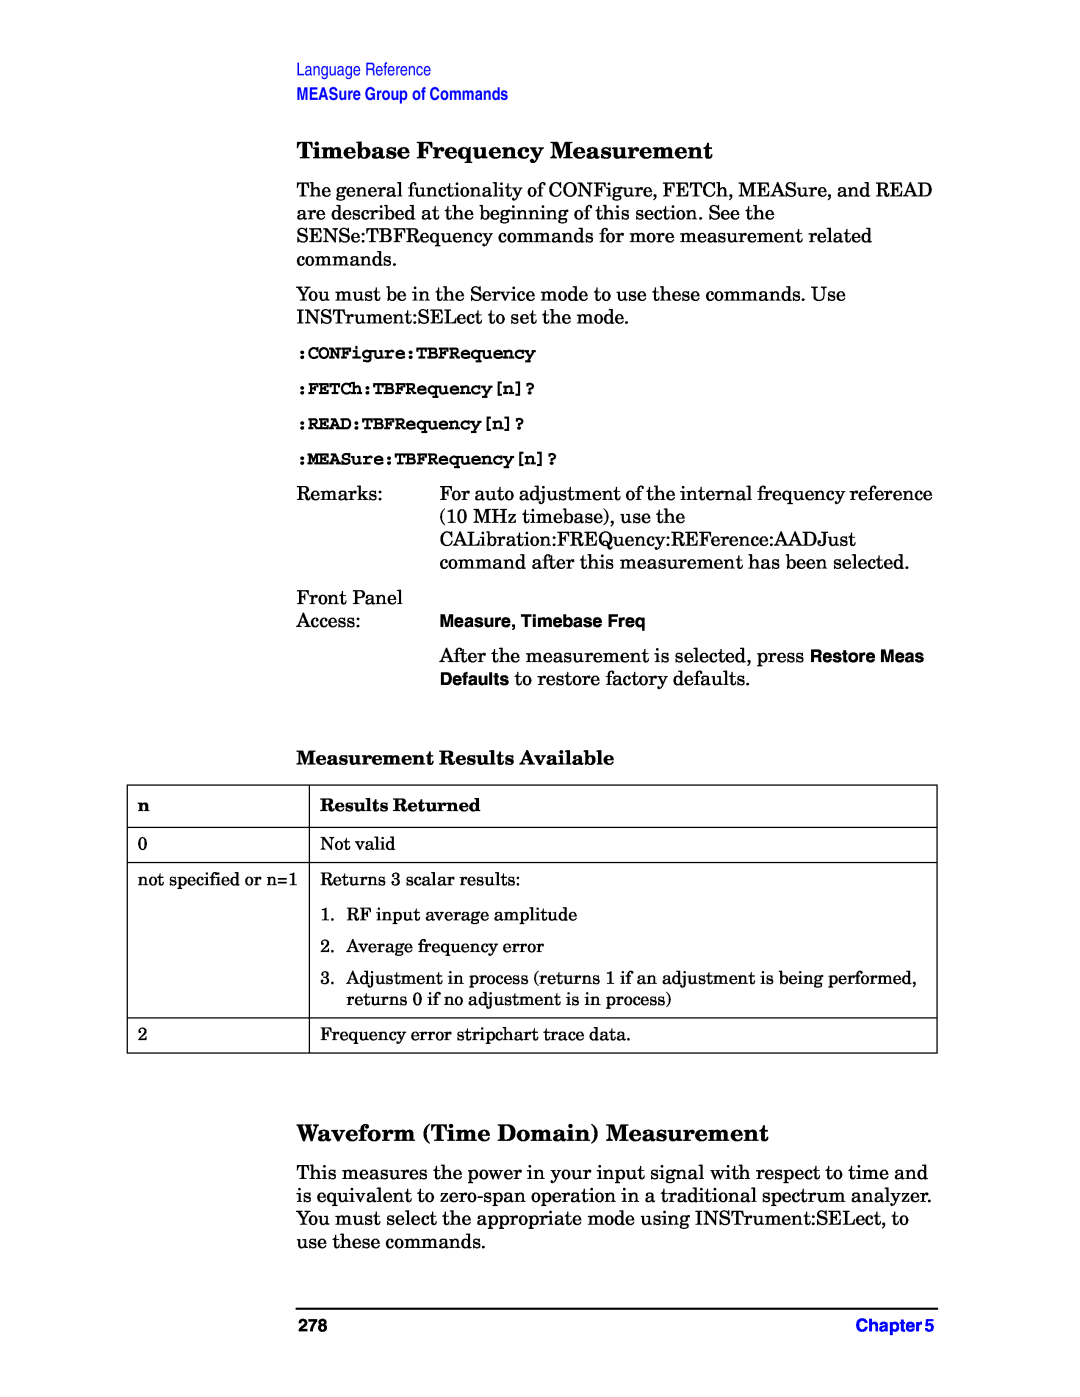 Agilent Technologies E4406A VSA manual Timebase Frequency Measurement, Waveform Time Domain Measurement 